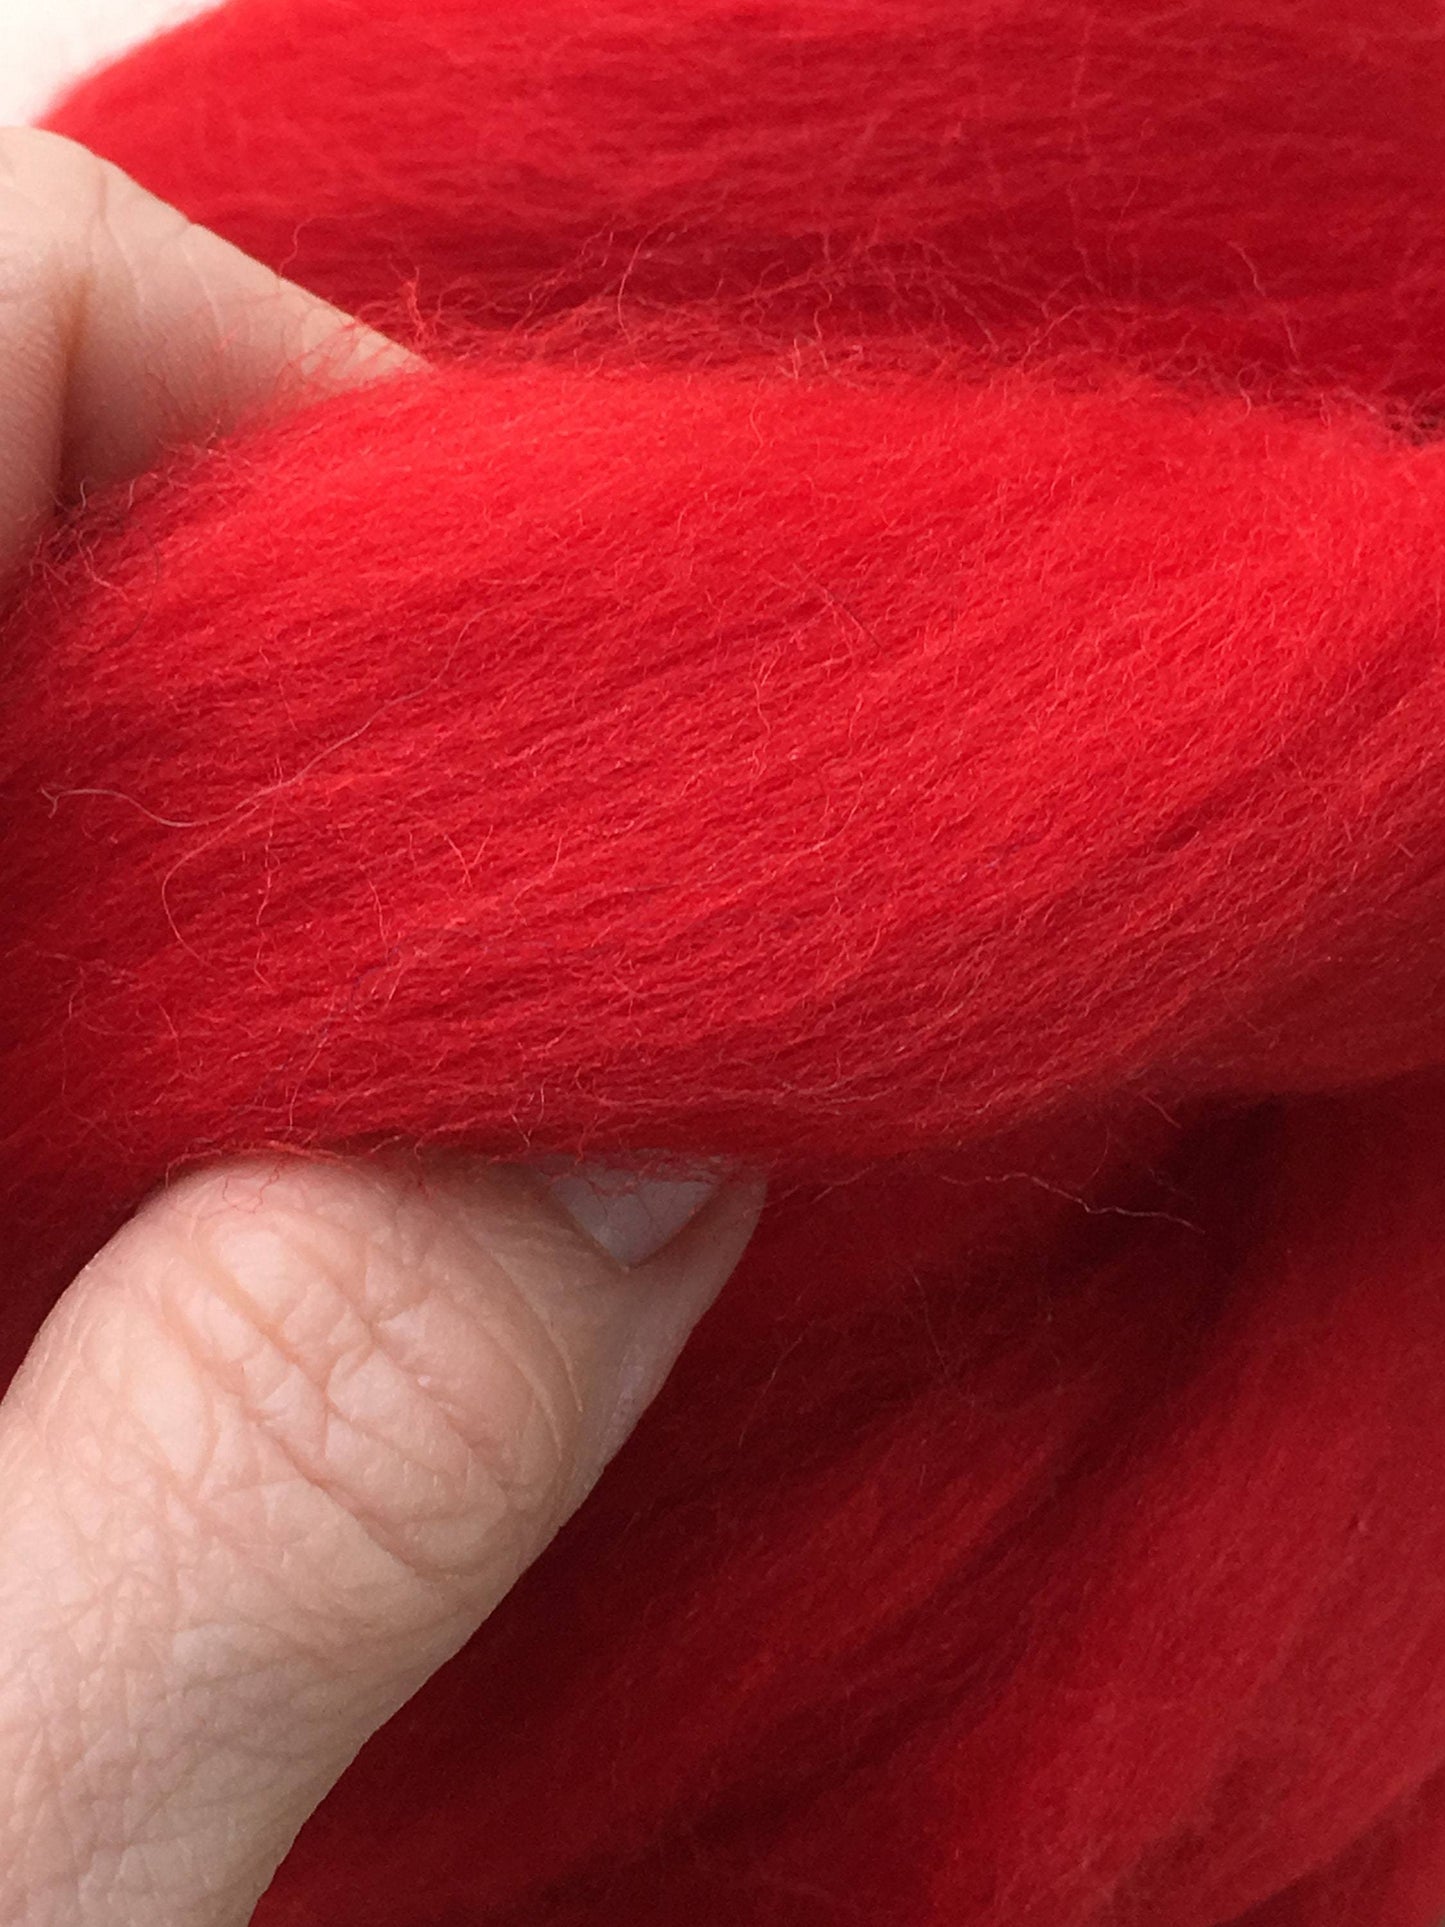 Red Merino Wool Top Roving